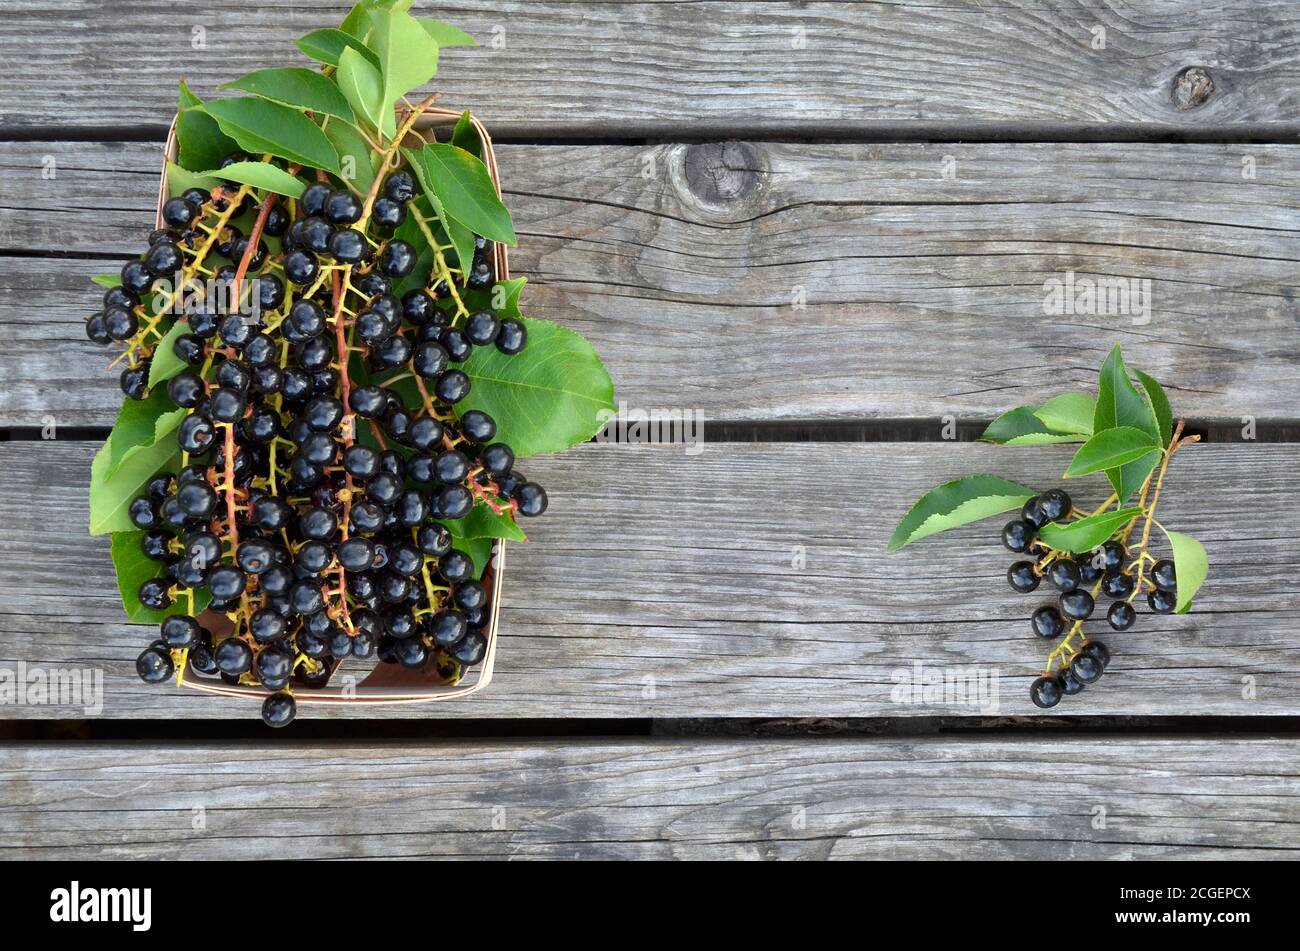 Prunus serotina. Black ripe bird cherry berries on an old wooden table. Close-up, top view Stock Photo